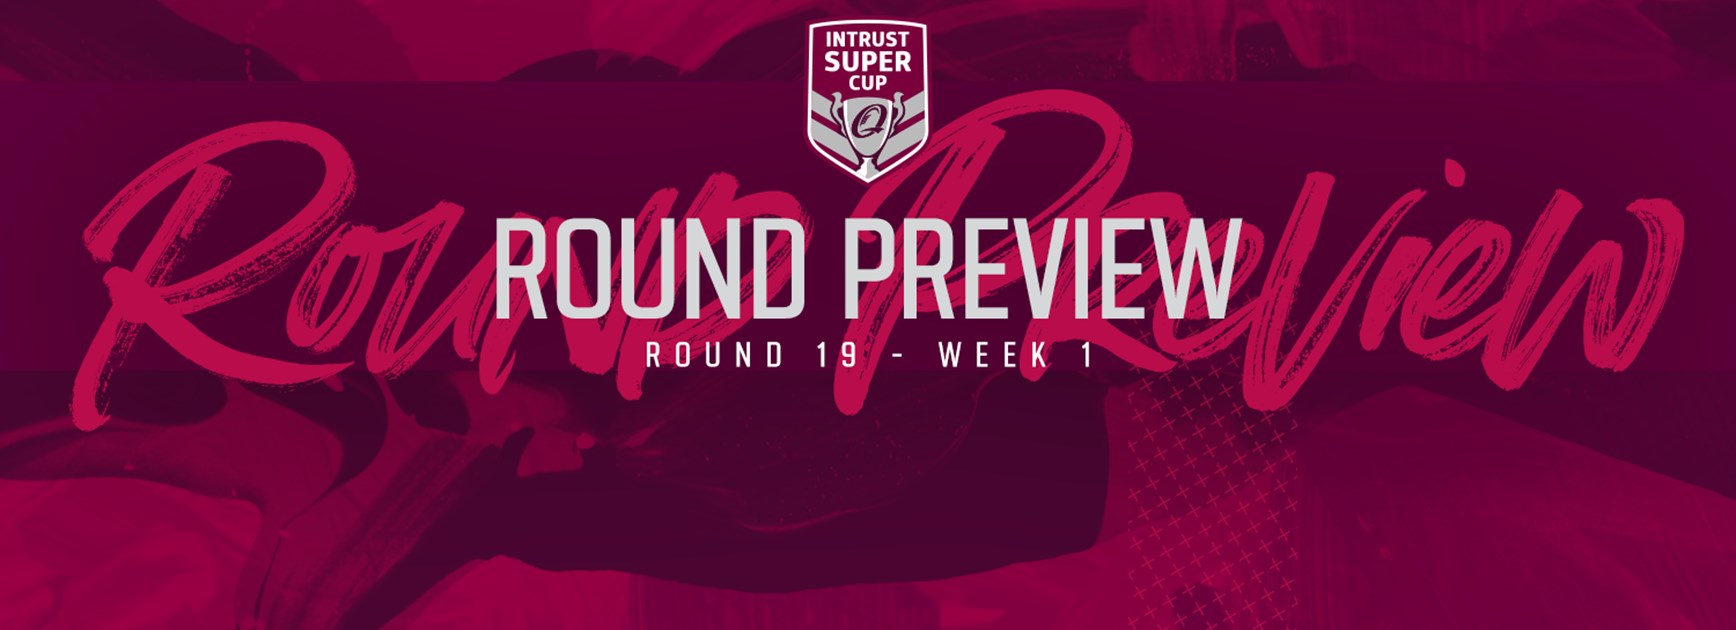 Intrust Super Cup Round 19 Week 1 preview